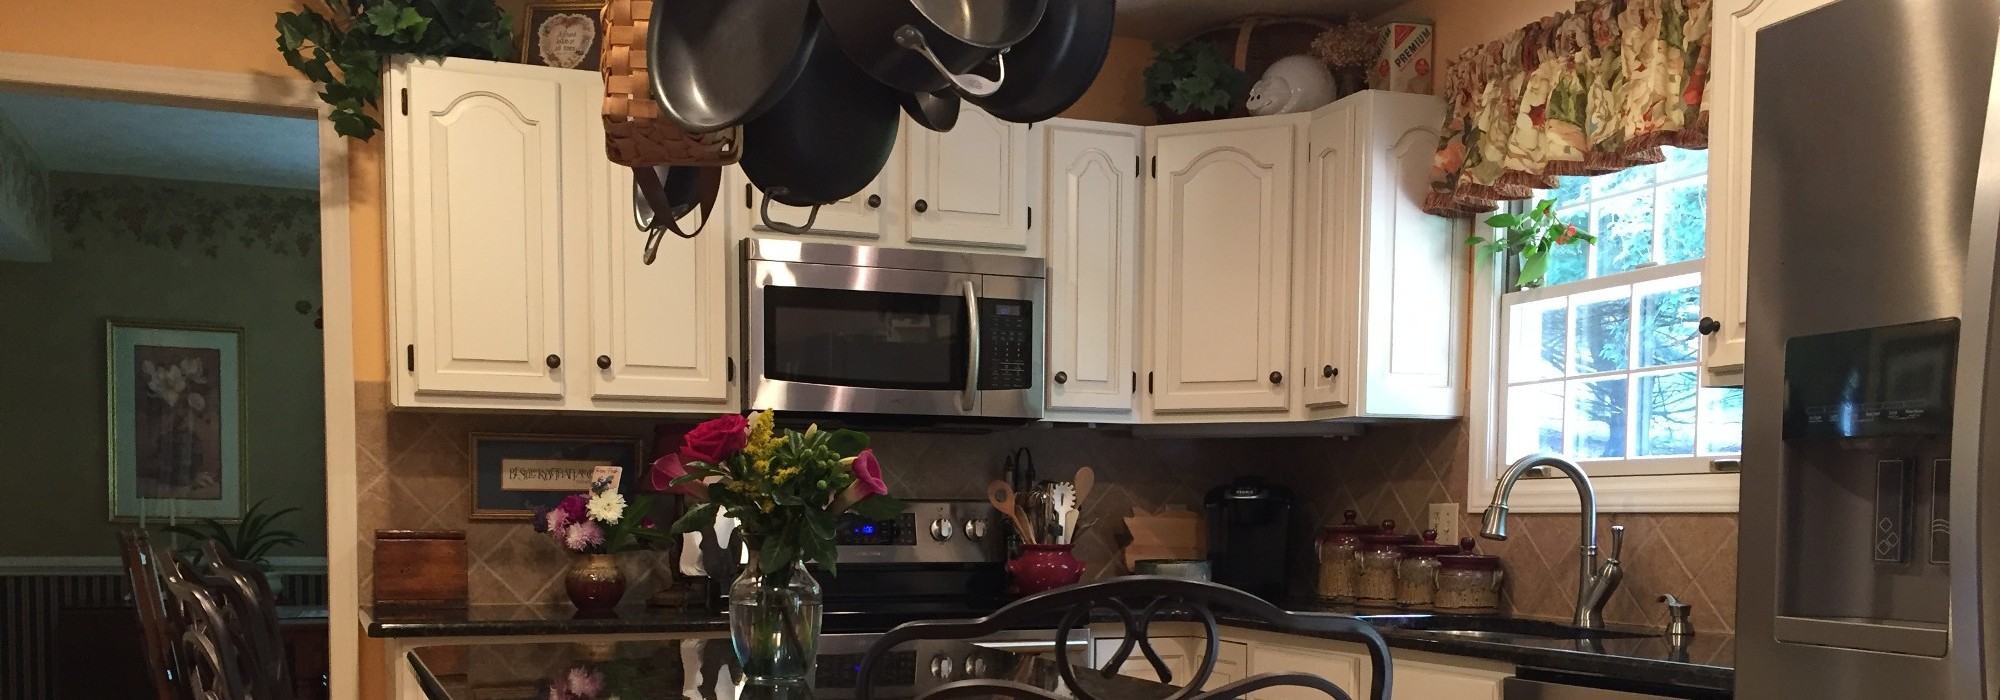 Kitchen with Appliances